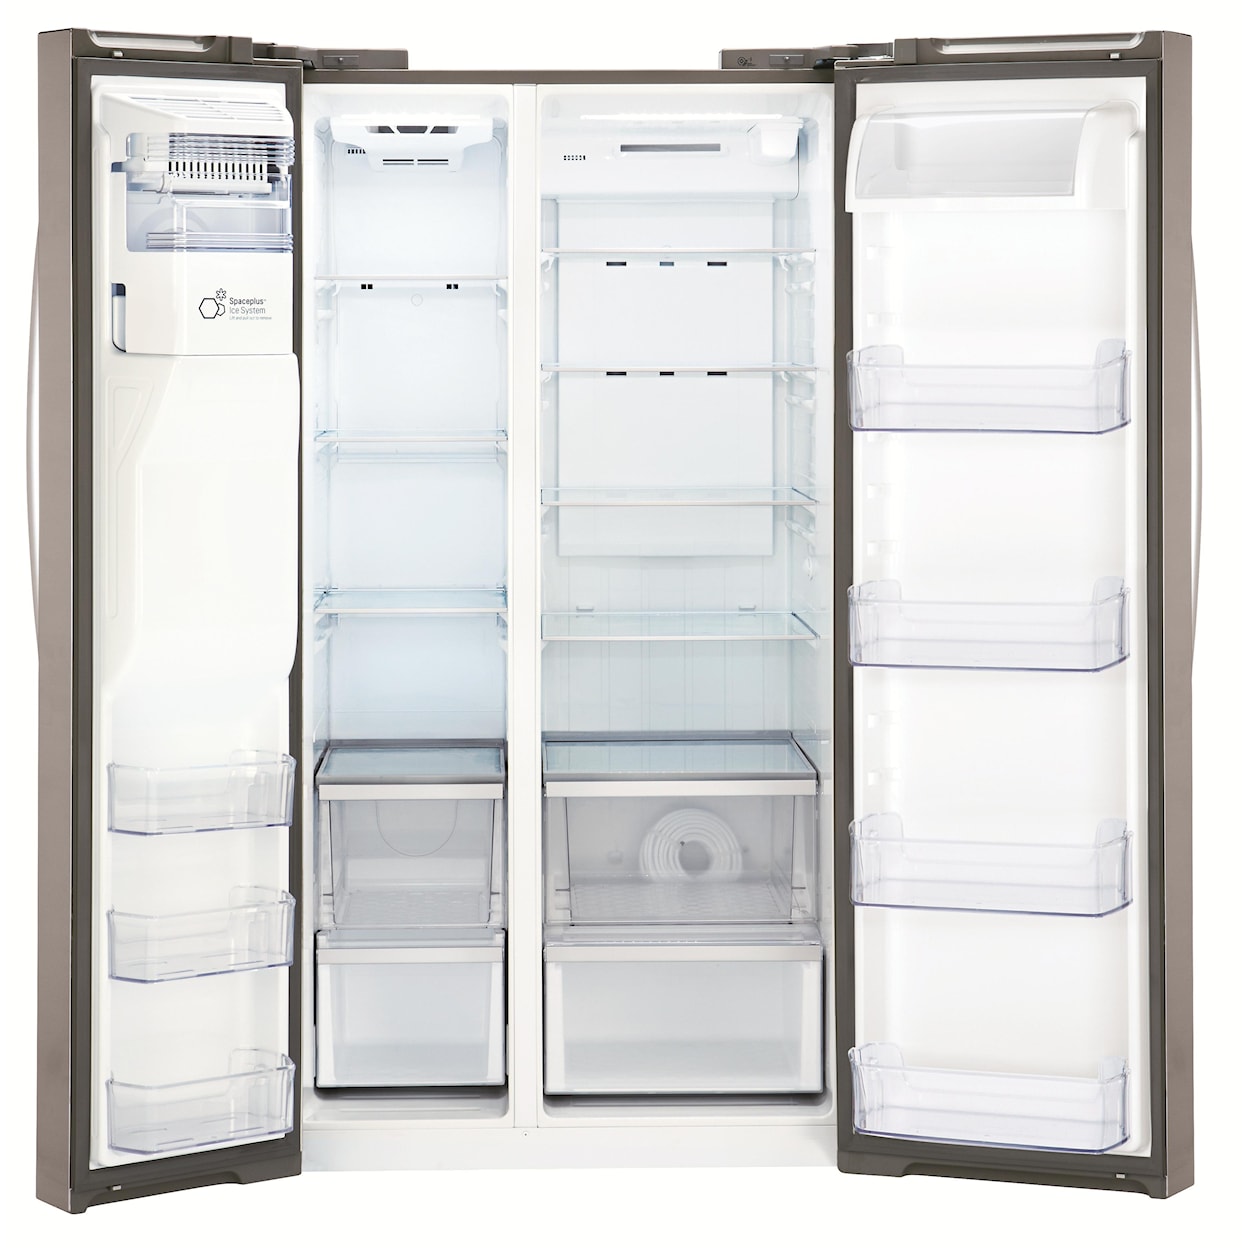 LG Appliances Side by Side Refrigerators 26 cu. ft. Side by Side Refrigerator